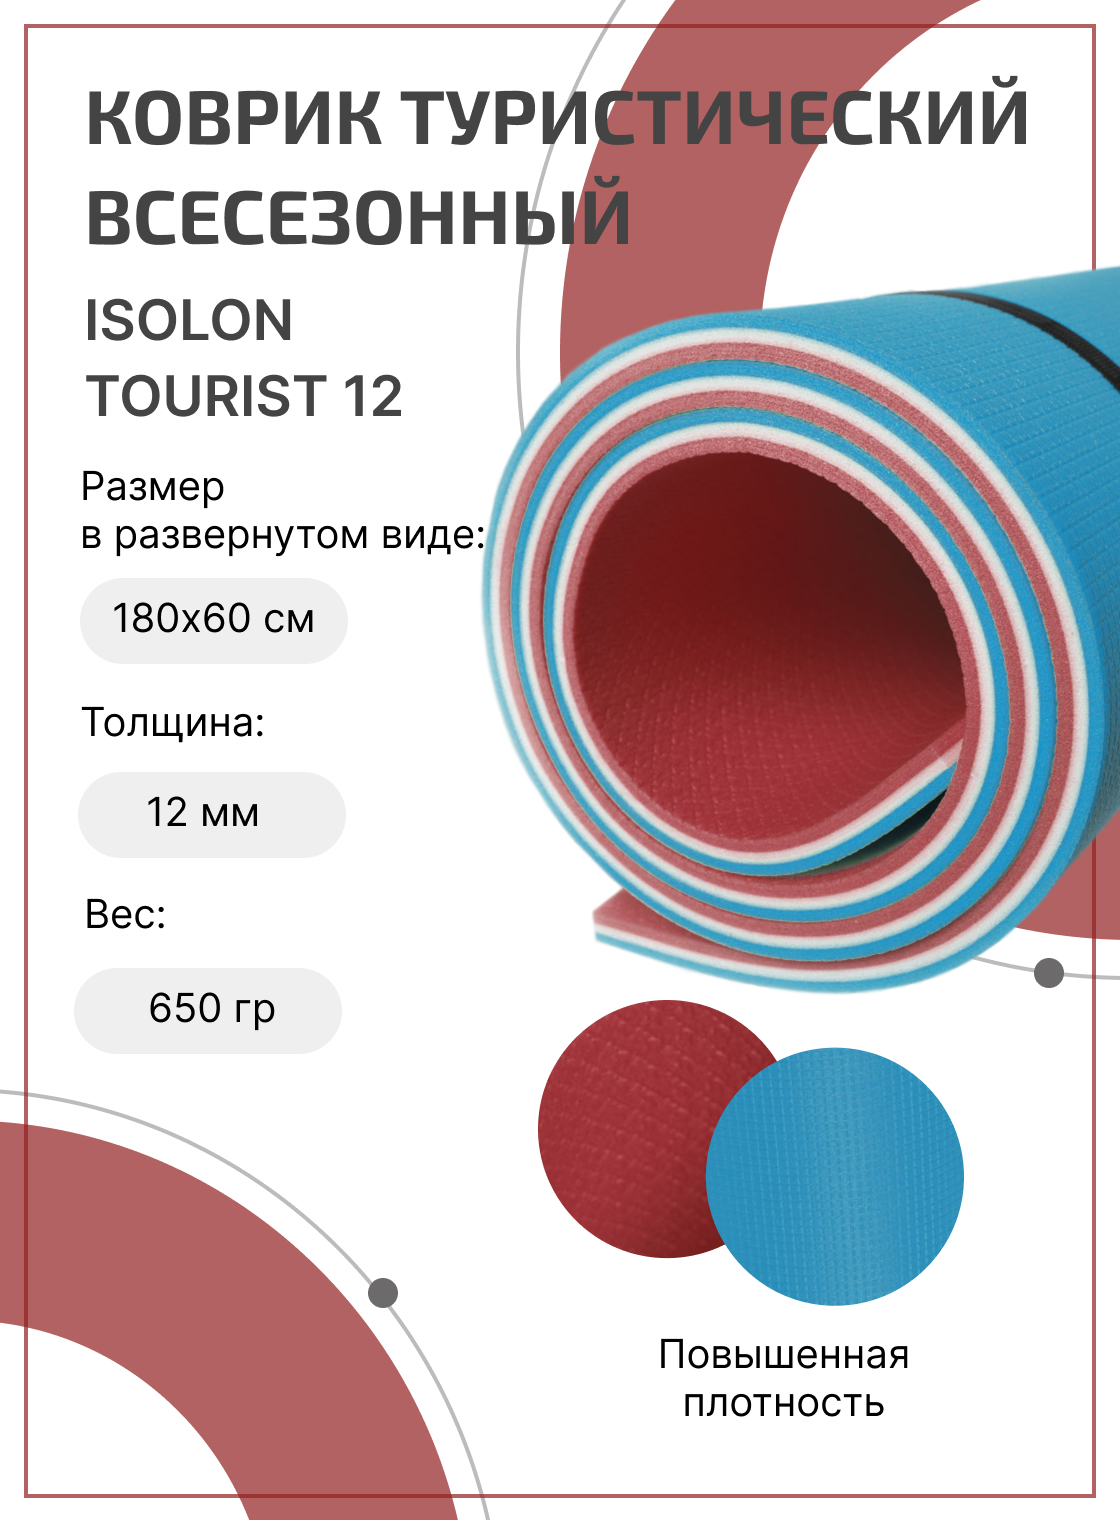 Коврик для туризма и отдыха классический Isolon Tourist, 180х60см 12мм бордо/белый/синий